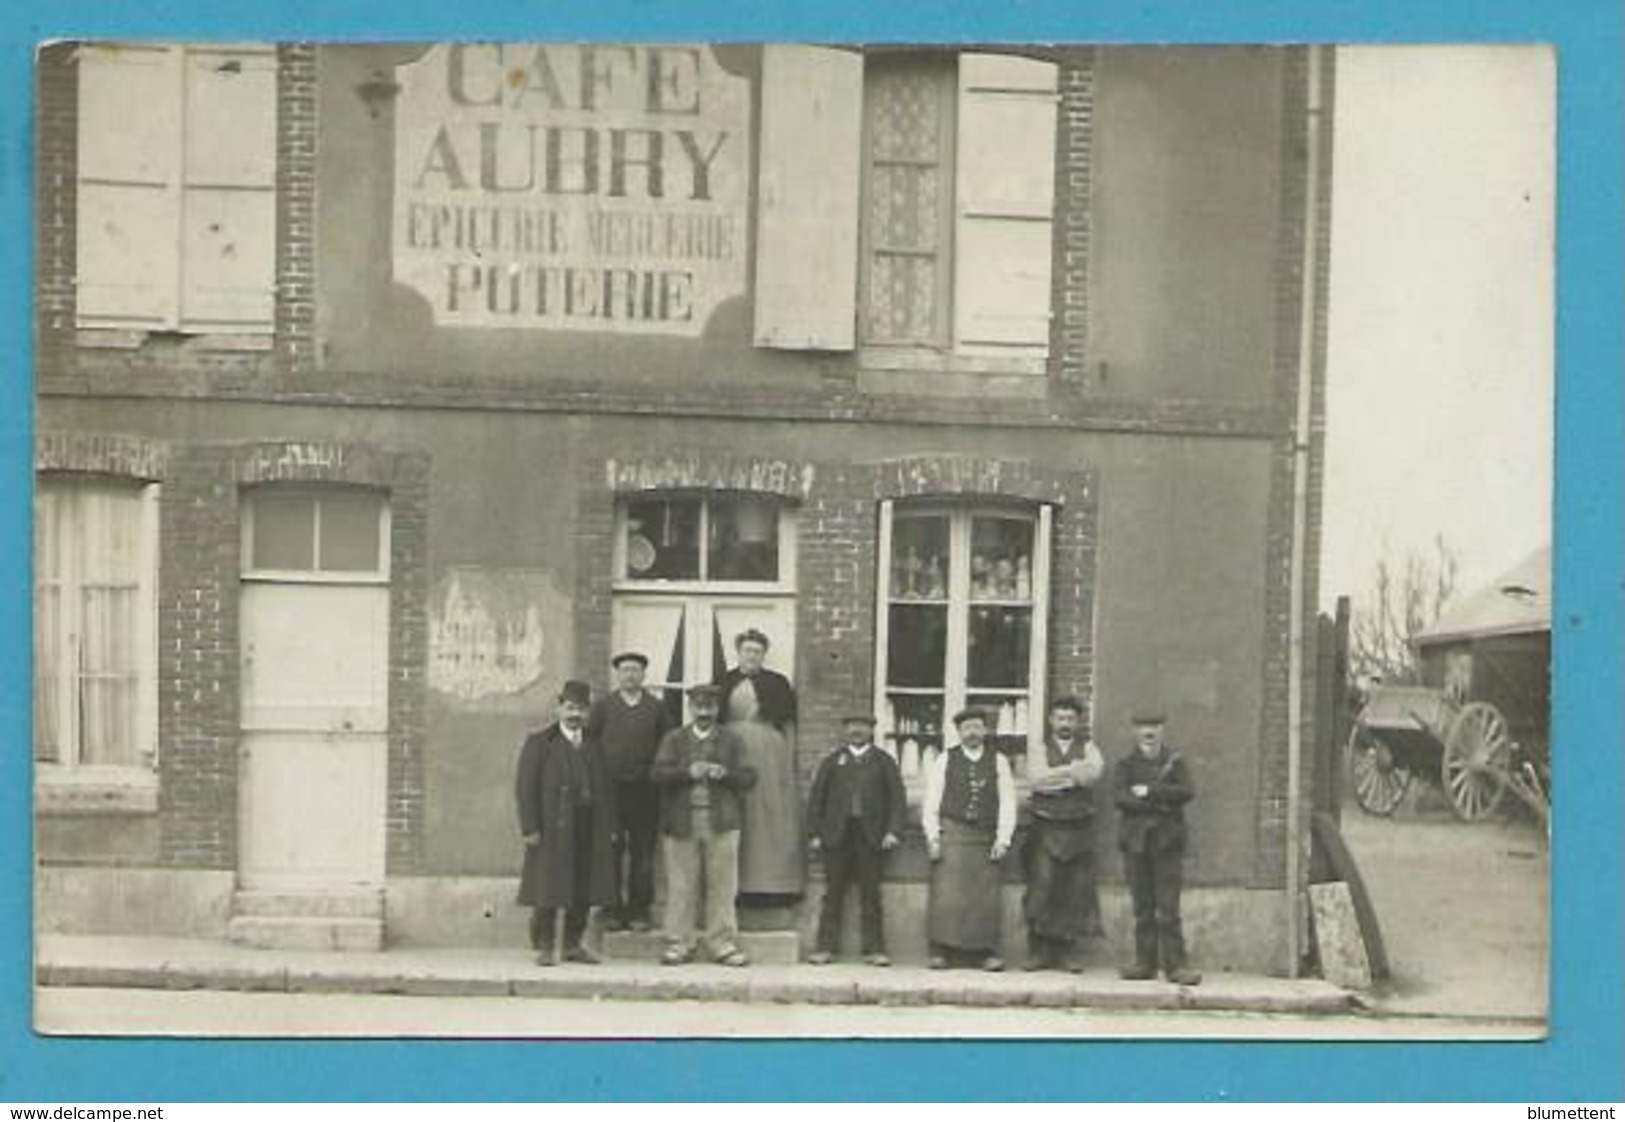 CPA PHOTO Café AUBRY Epicerie Mercerie Poterie à CHAMPIGNY 94 - Champigny Sur Marne